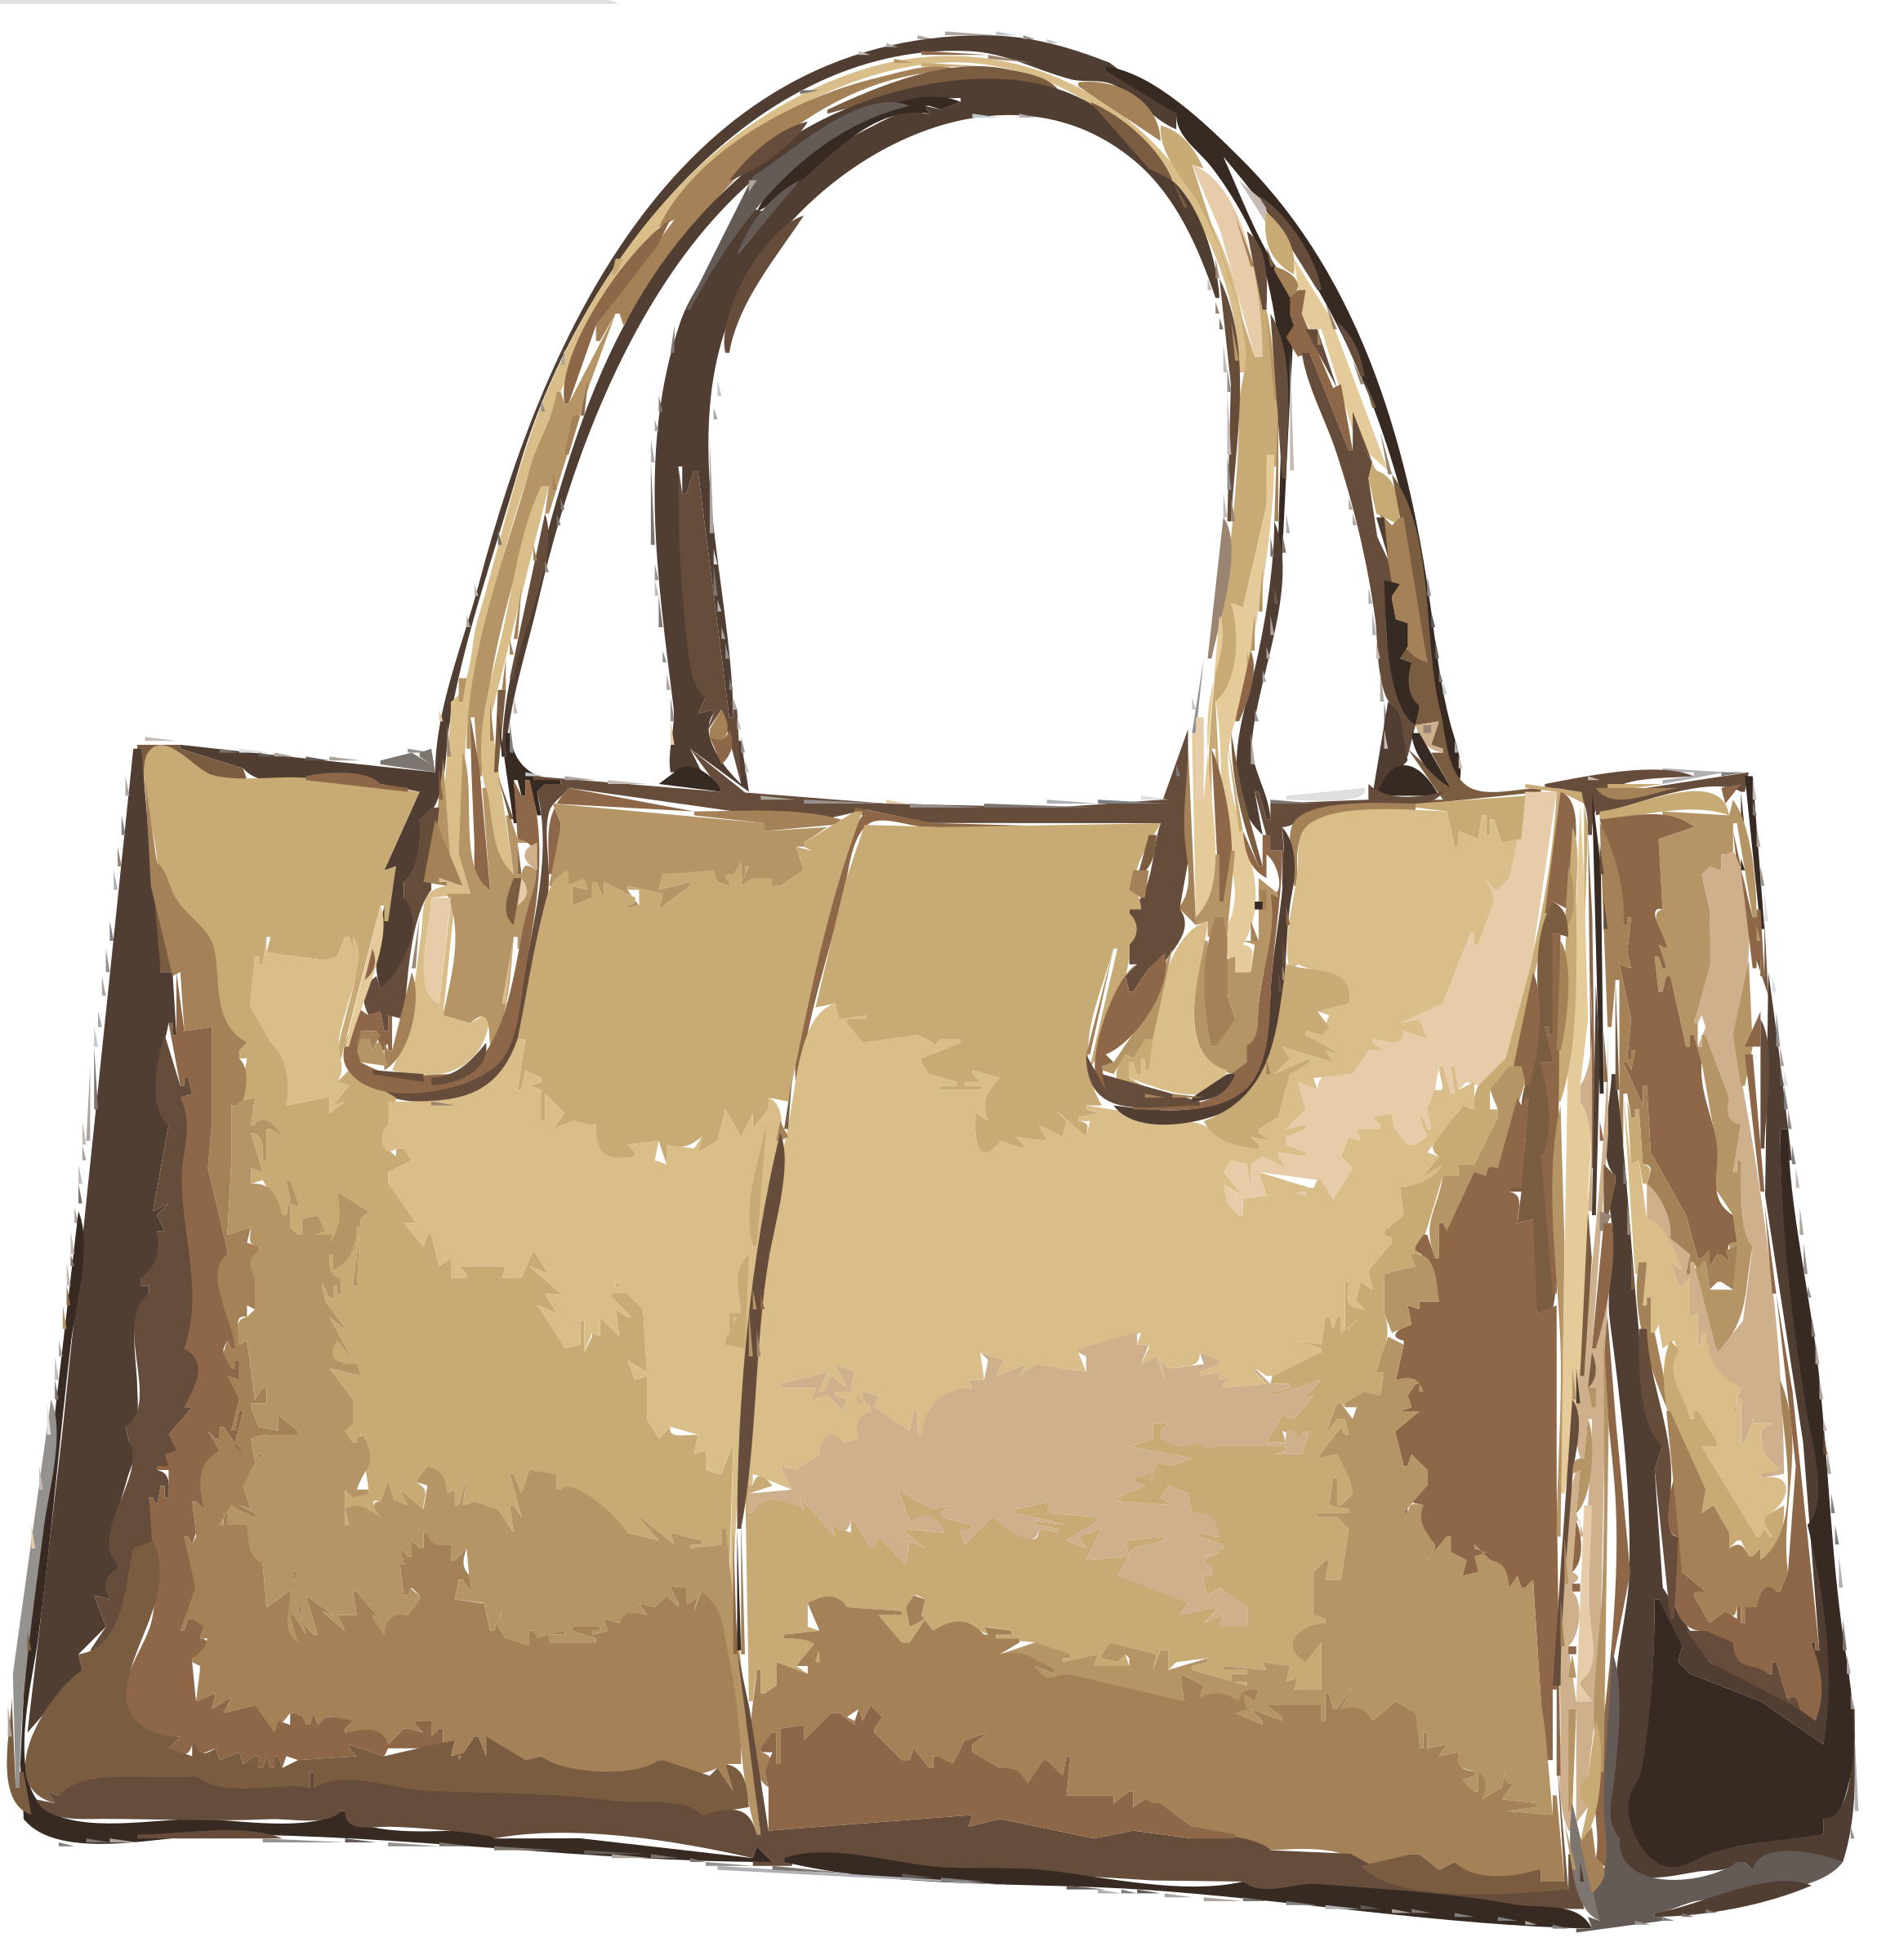 Fashion clipart handbag, Fashion handbag Transparent FREE for download ...